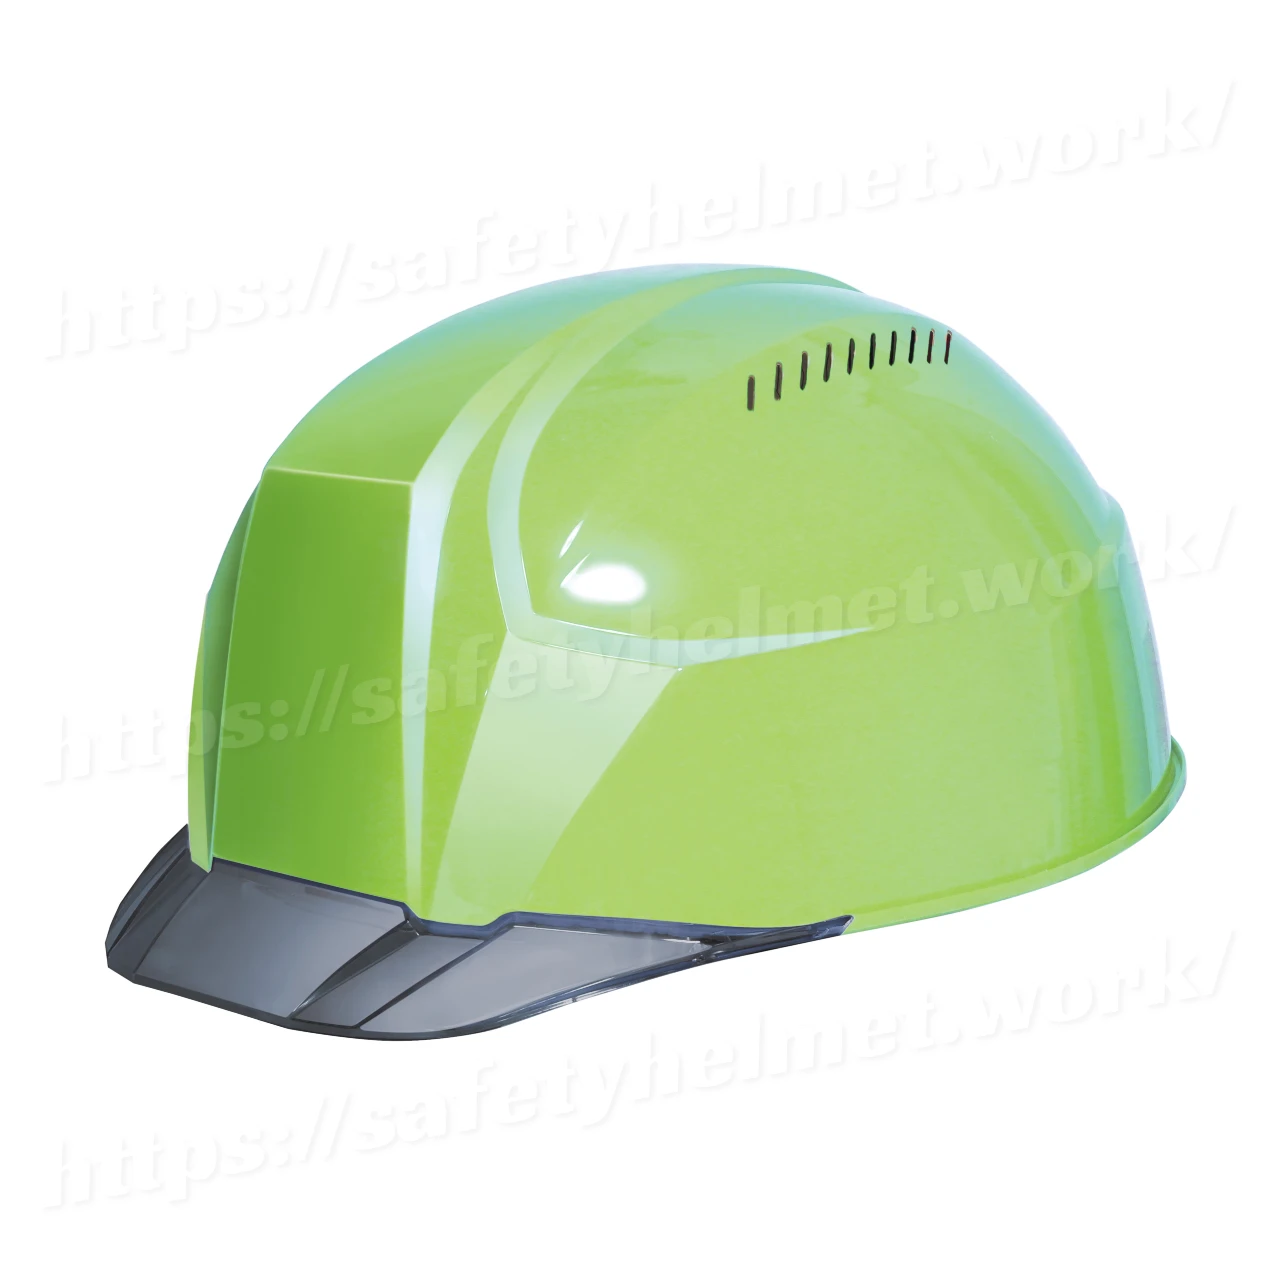 dic-lightest-helmet-keijin-clearvisor-aa23cv-freshgreen-smoke